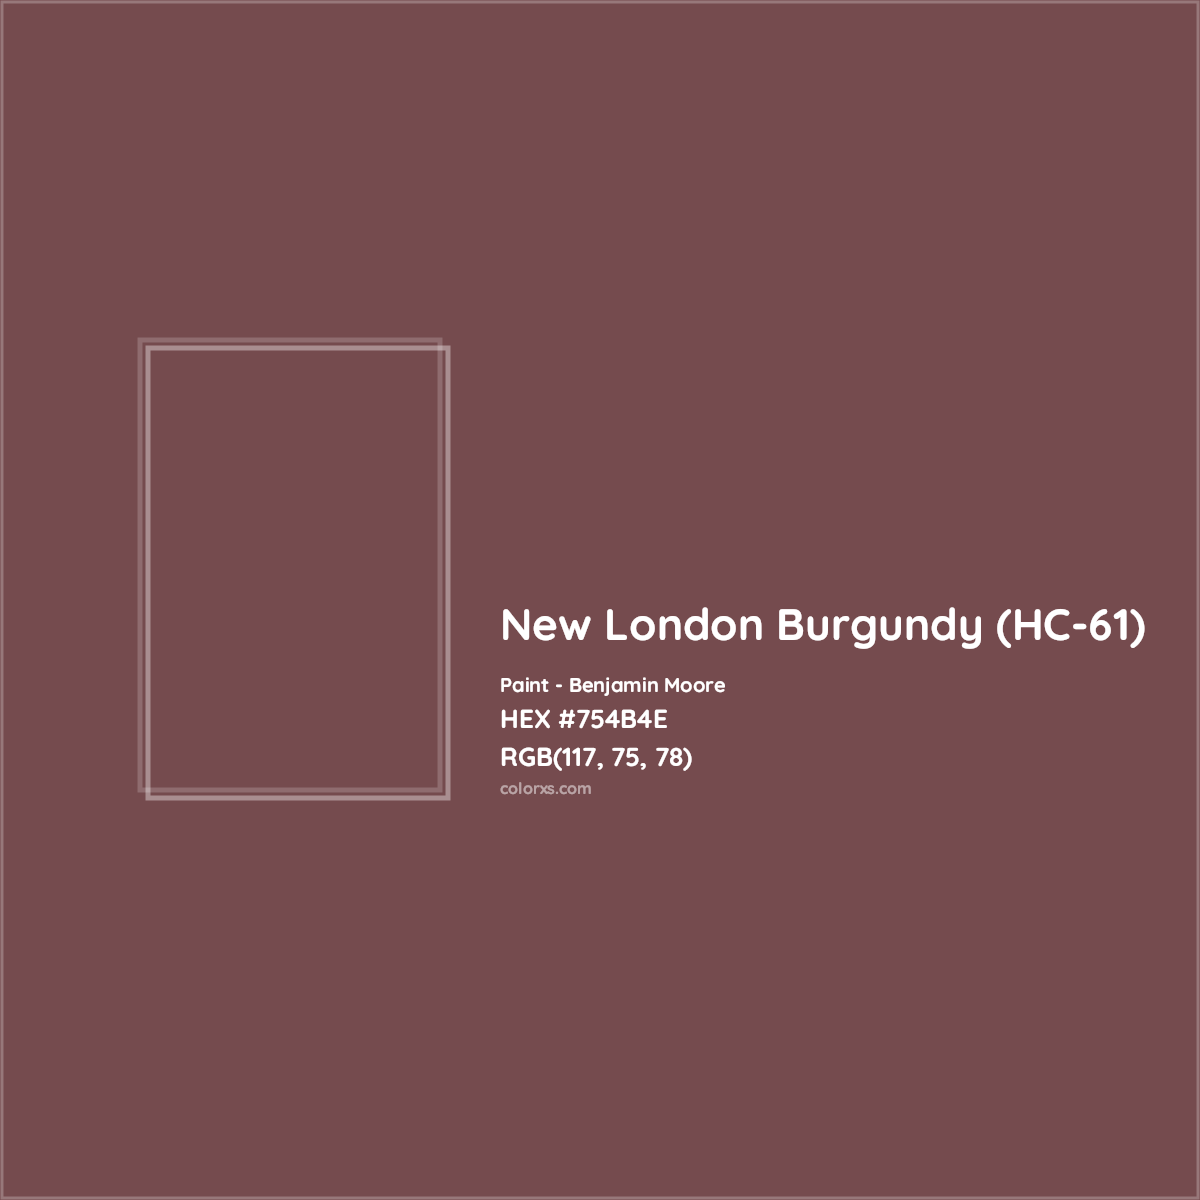 HEX #754B4E New London Burgundy (HC-61) Paint Benjamin Moore - Color Code